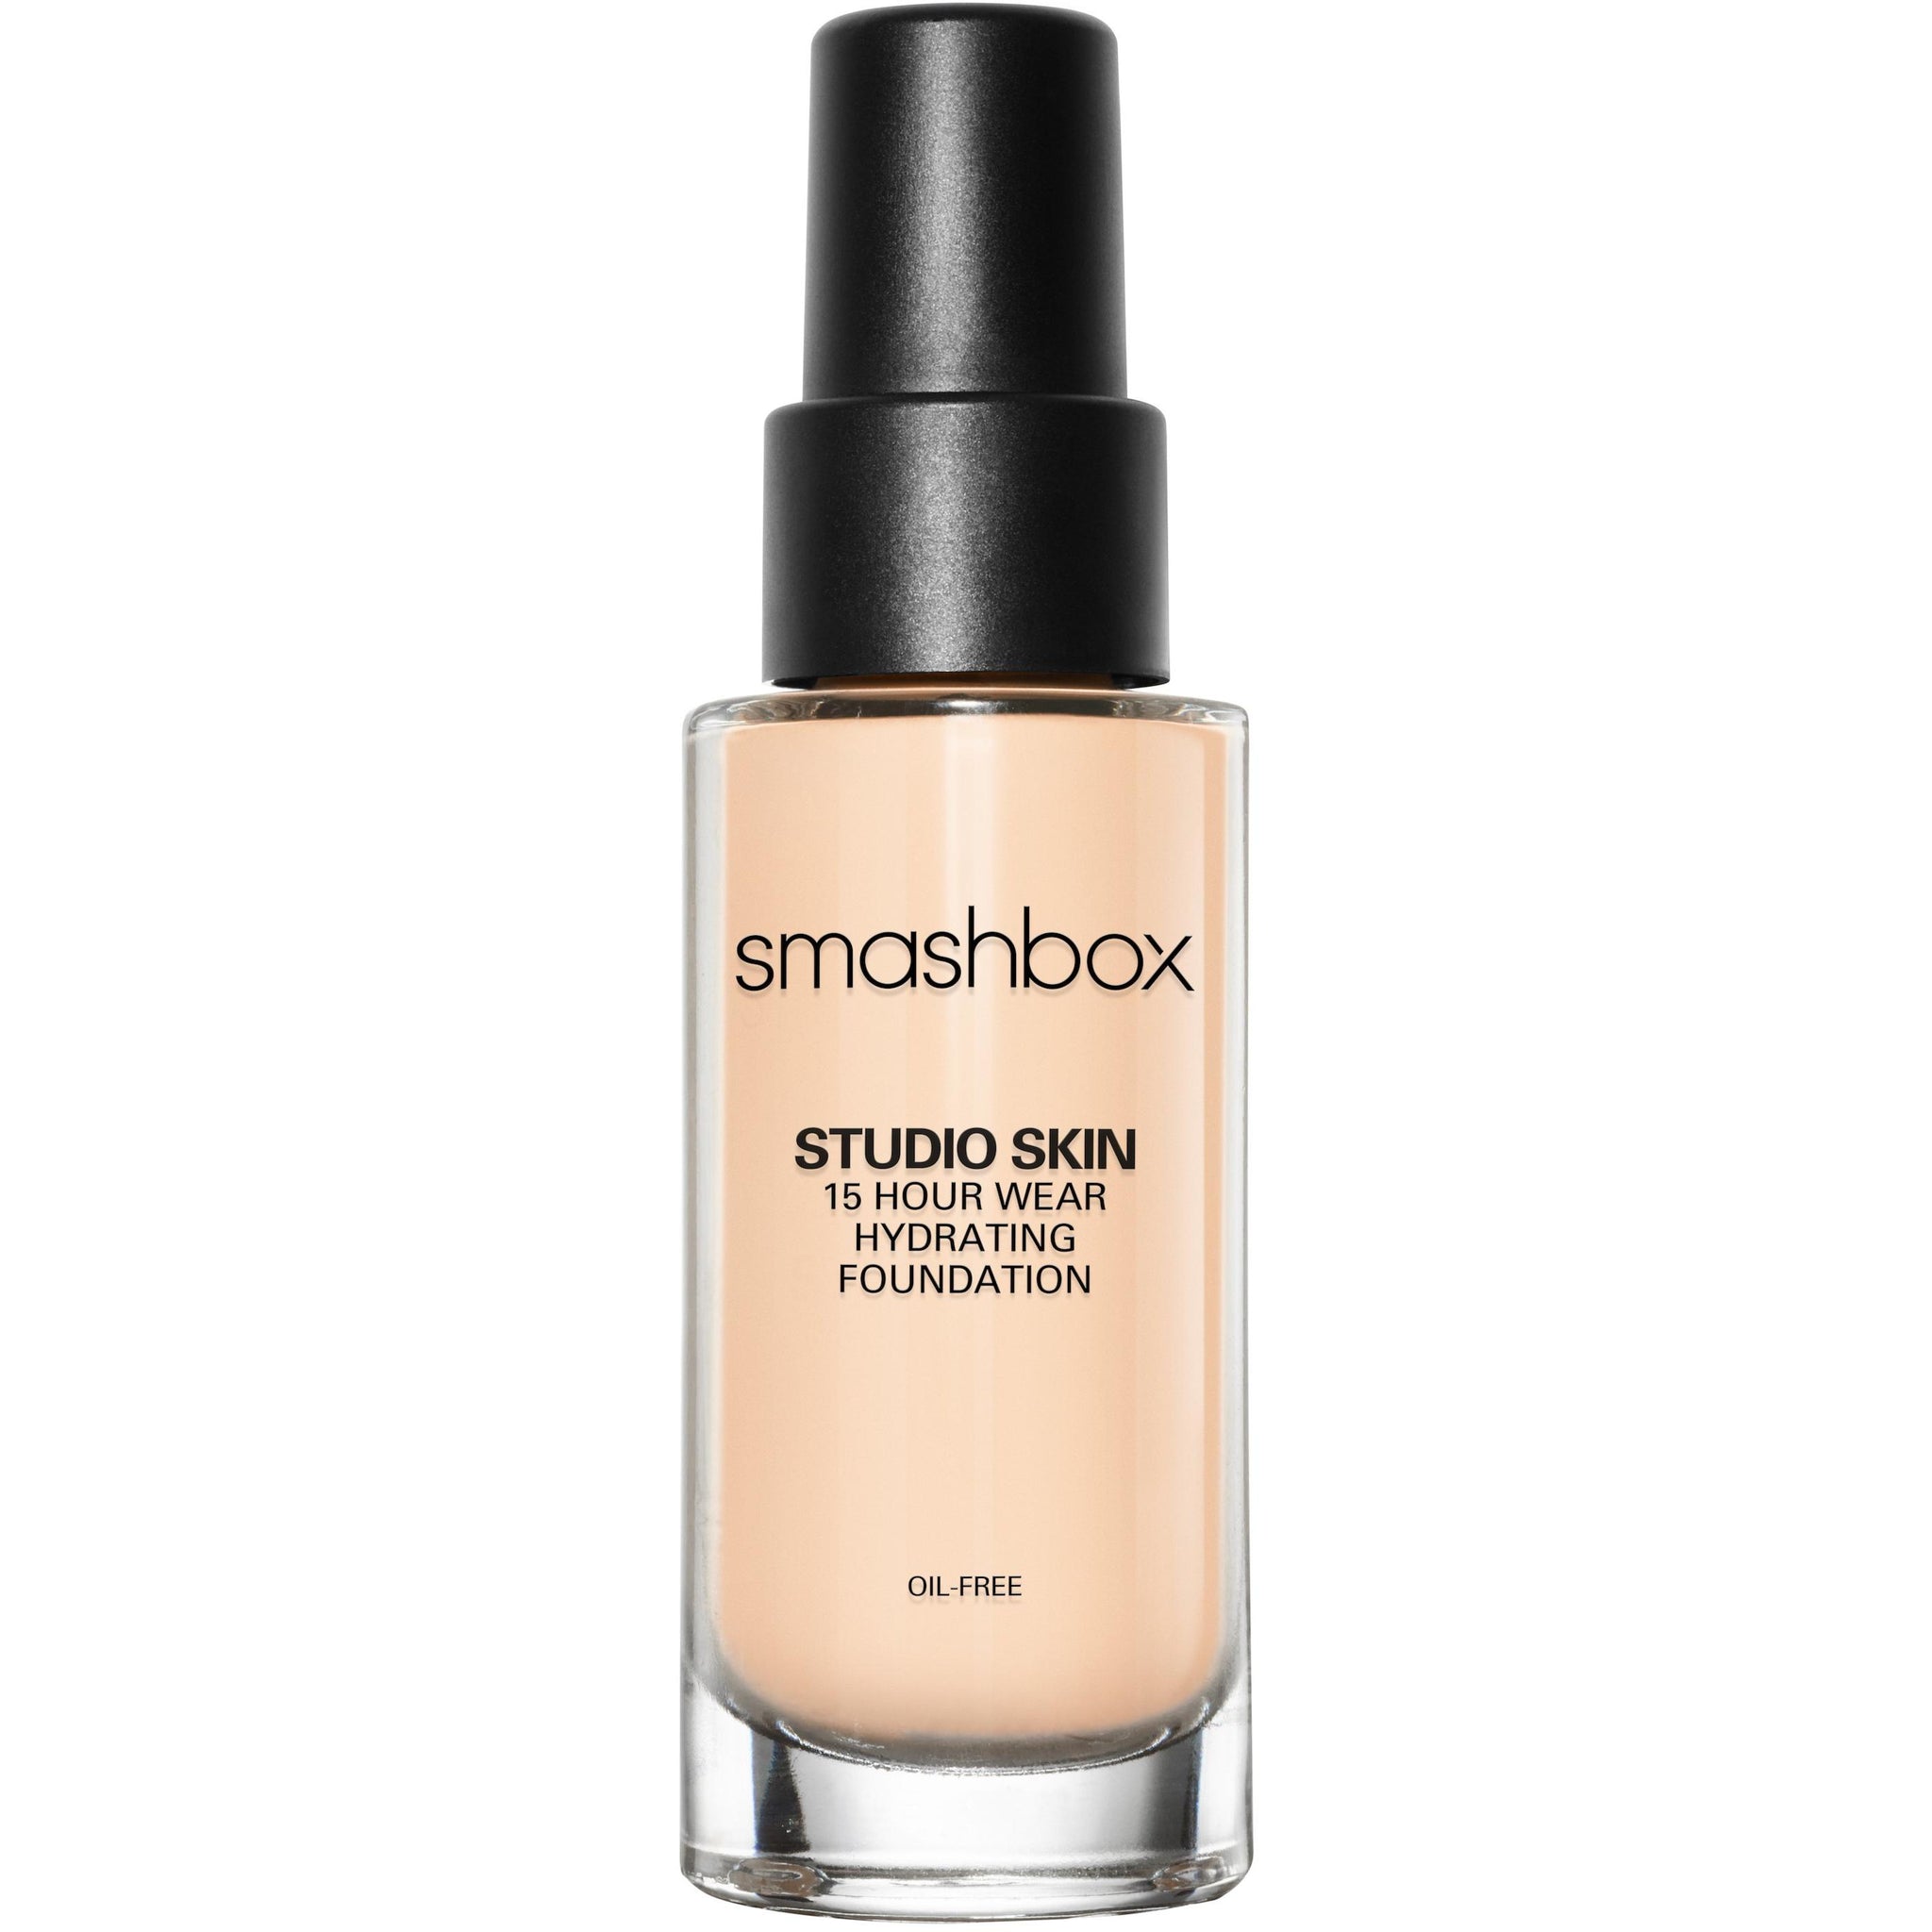 Studio Skin Foundation farði - Smashbox